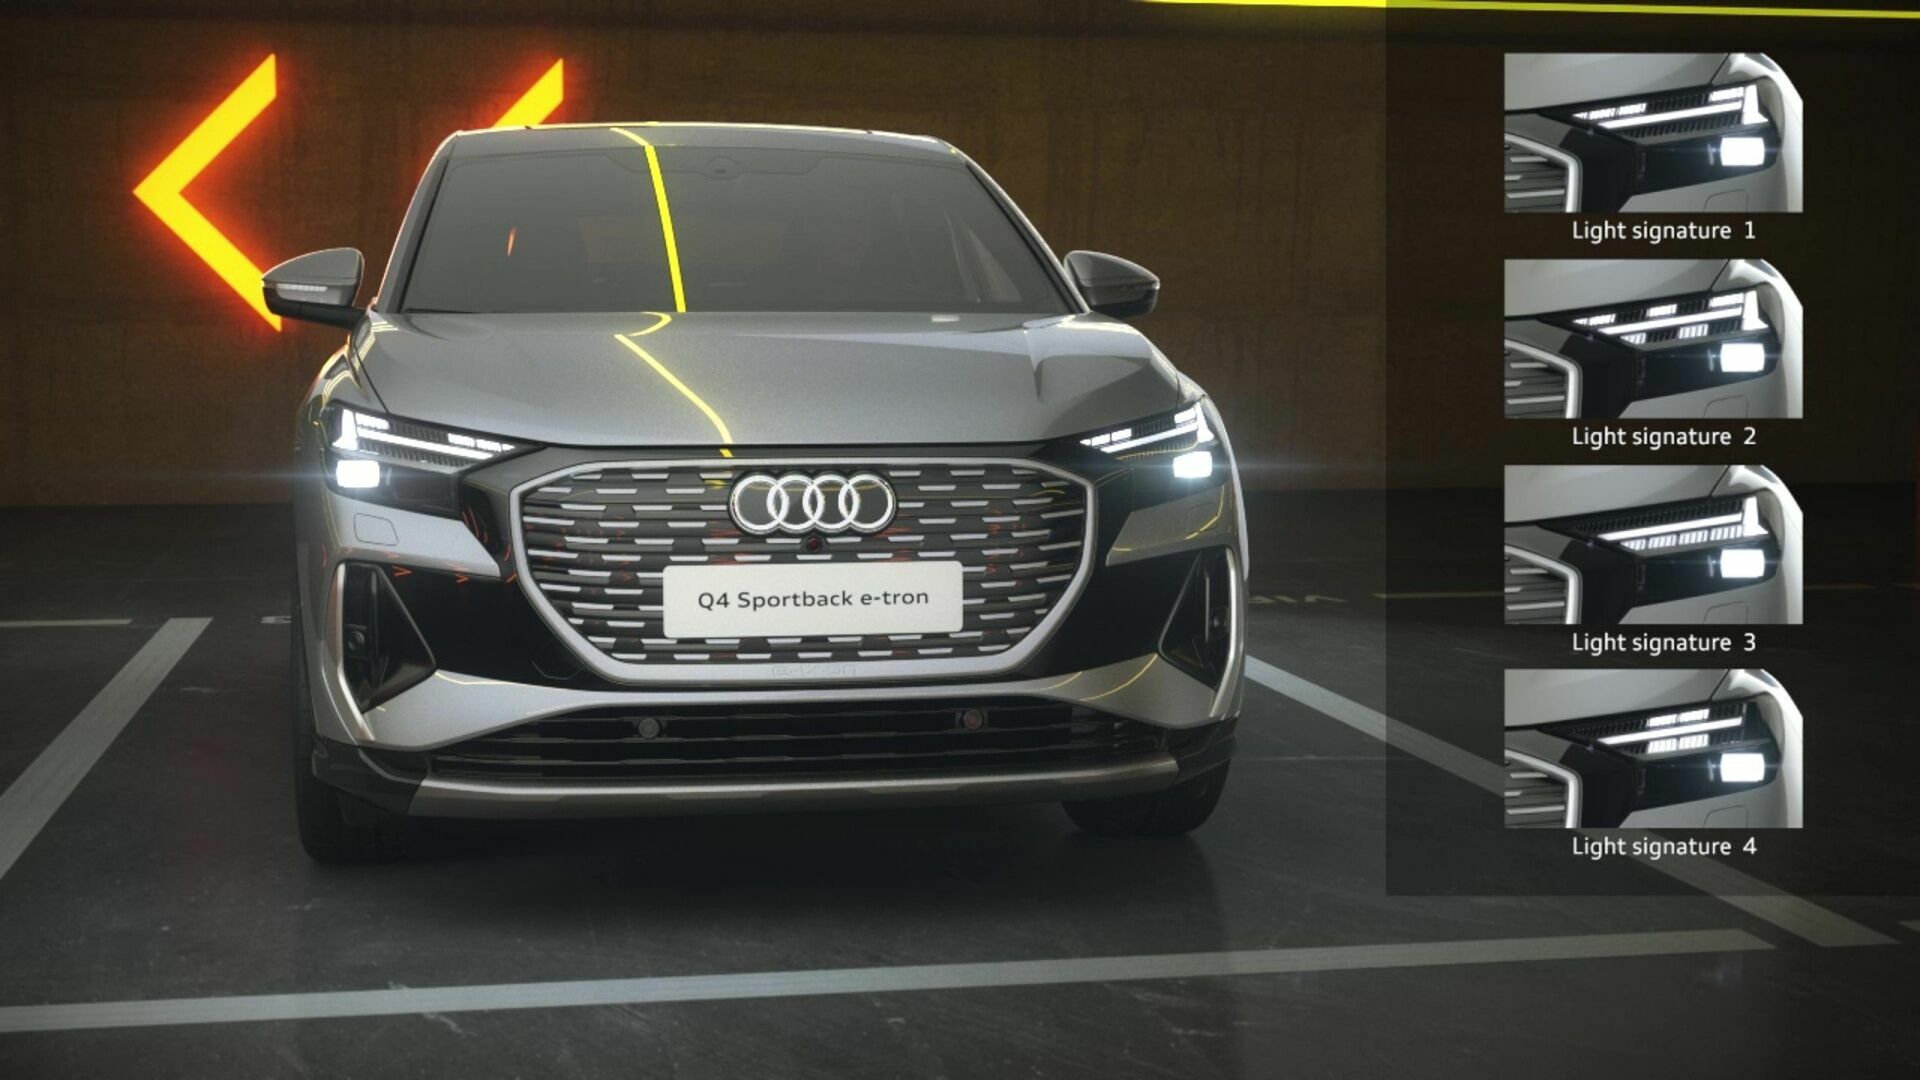 Animation: Daytime running lights technology of the Audi Q4 Sportback e-tron